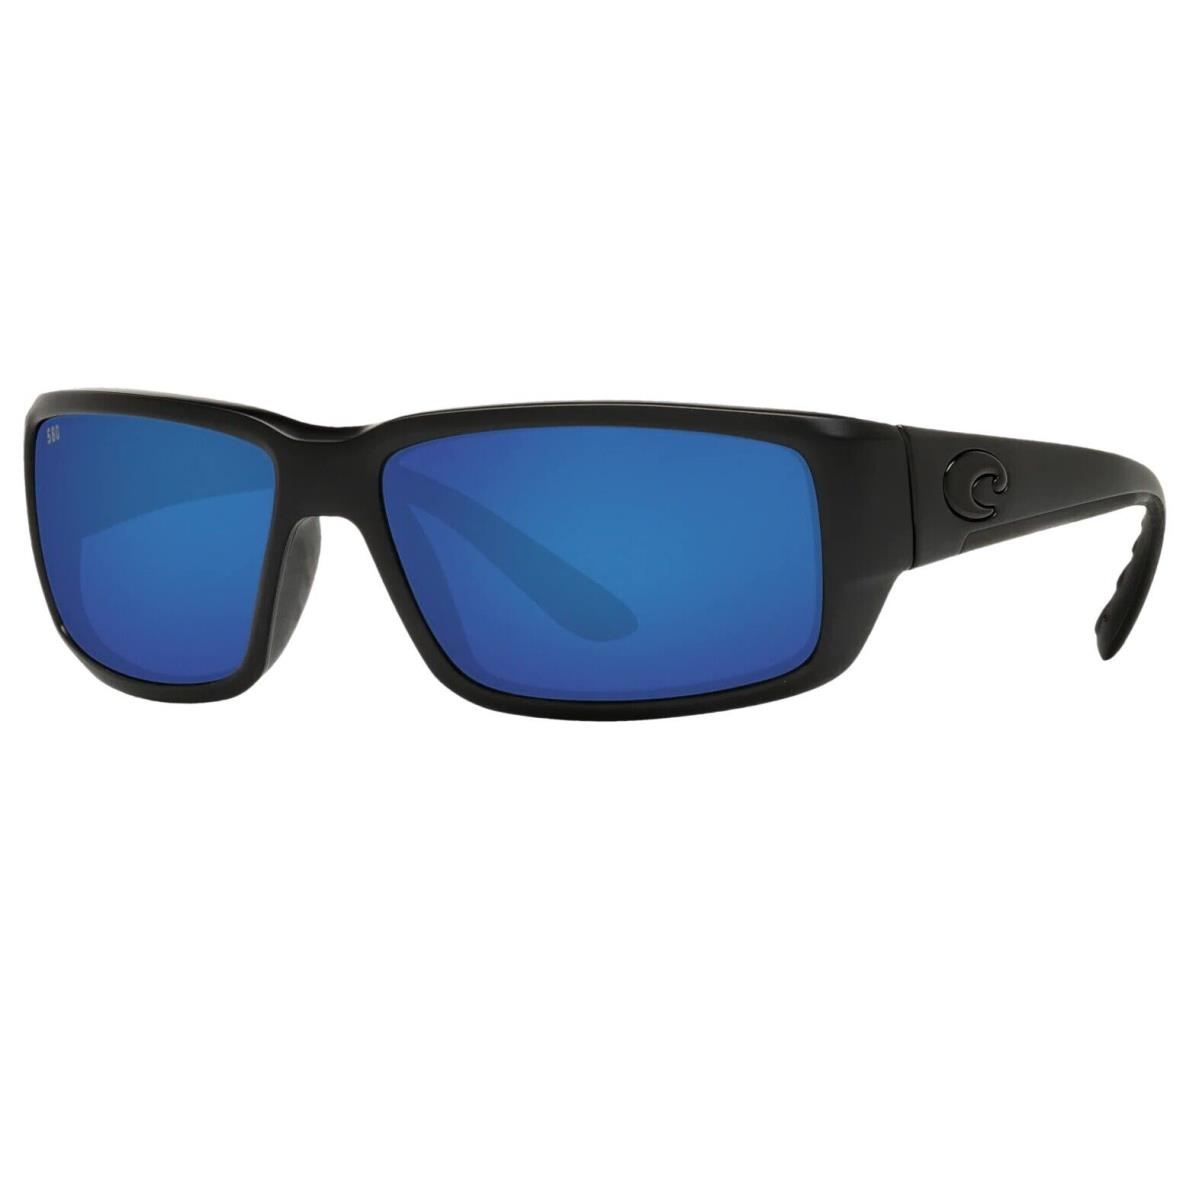 Costa Fantail Sunglasses - Polarized - Blackout W/blue Mirror 580G - Blackout Frame, Blue Mirror Lens